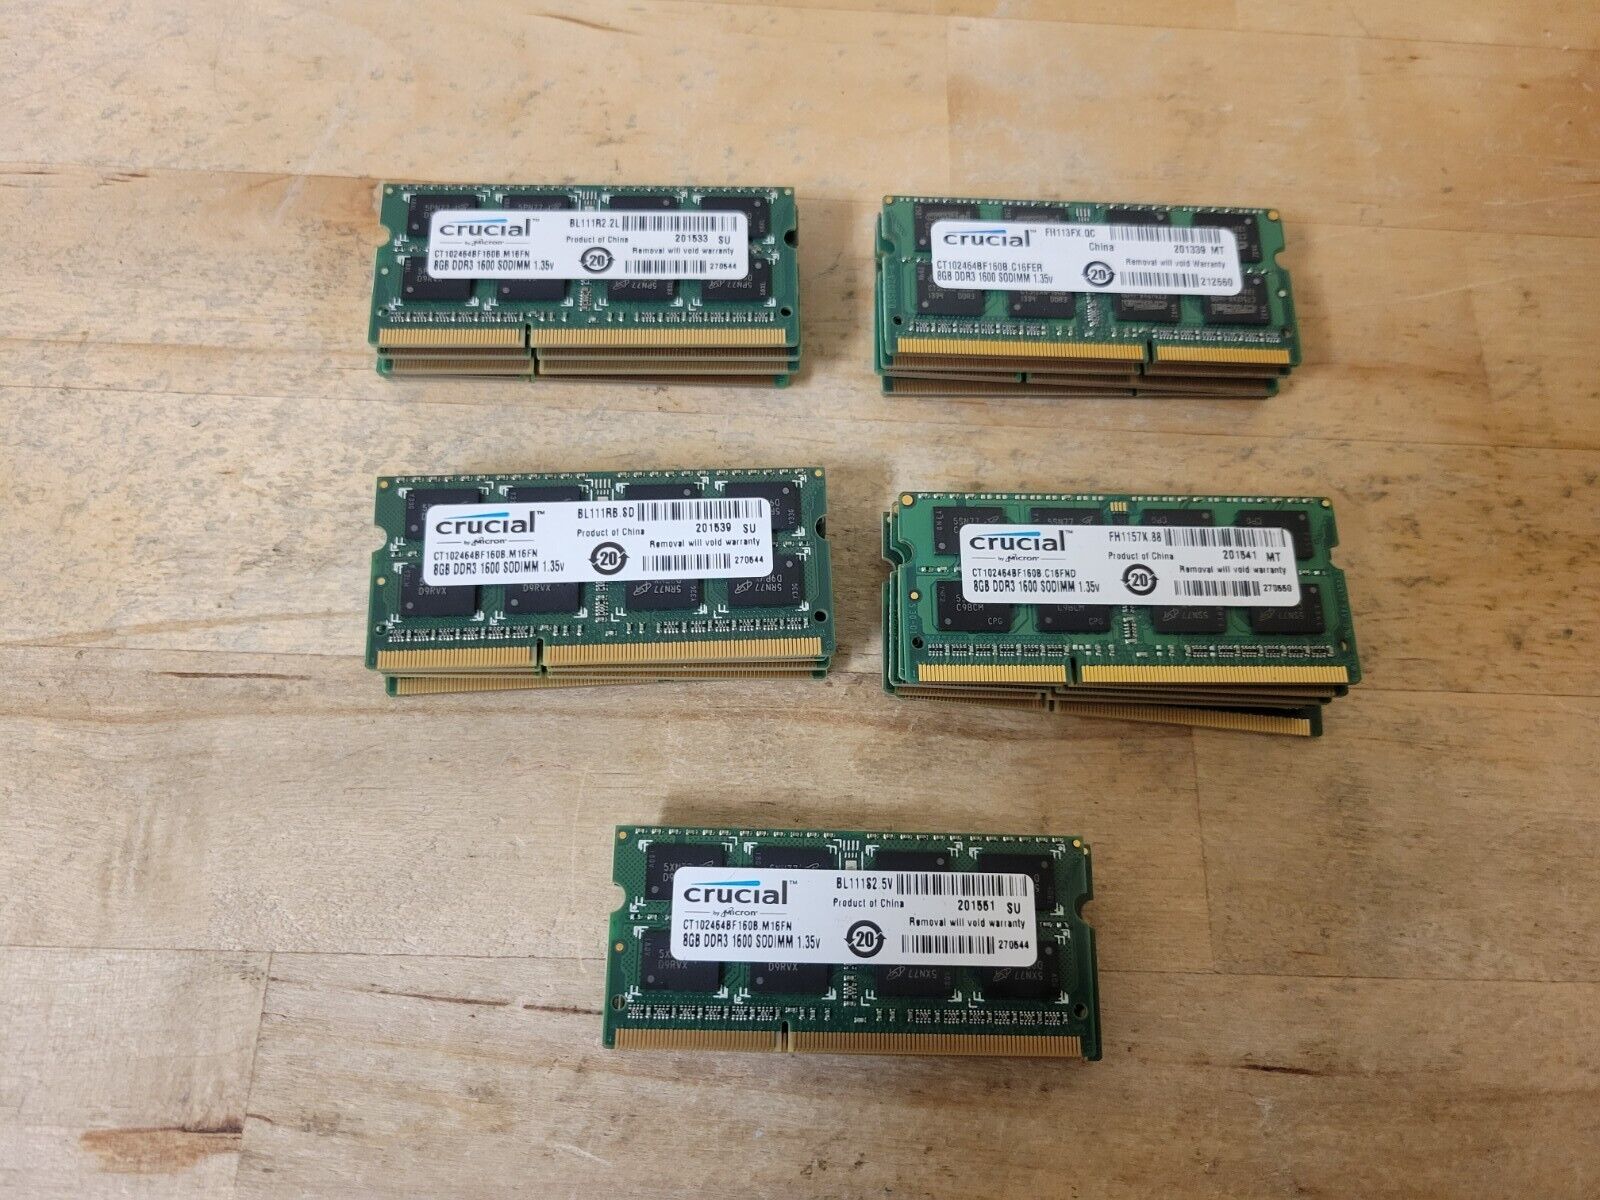 Lot of 23 Crucial 8GB DDR3 Laptop RAM Memory Lot free U.S. shipping 